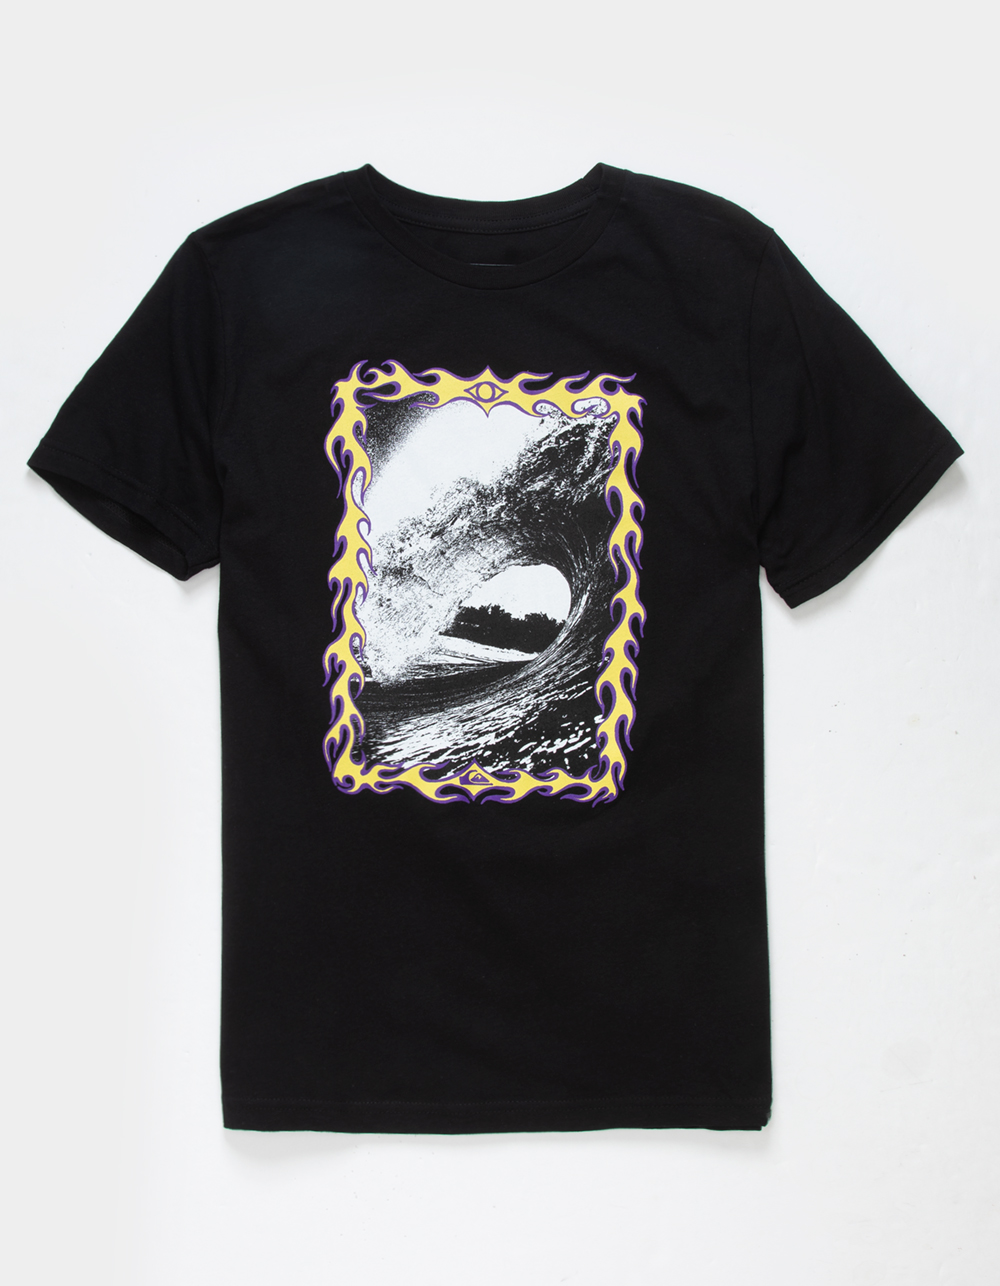 Quiksilver T-shirts & Surf Accessories | Tillys